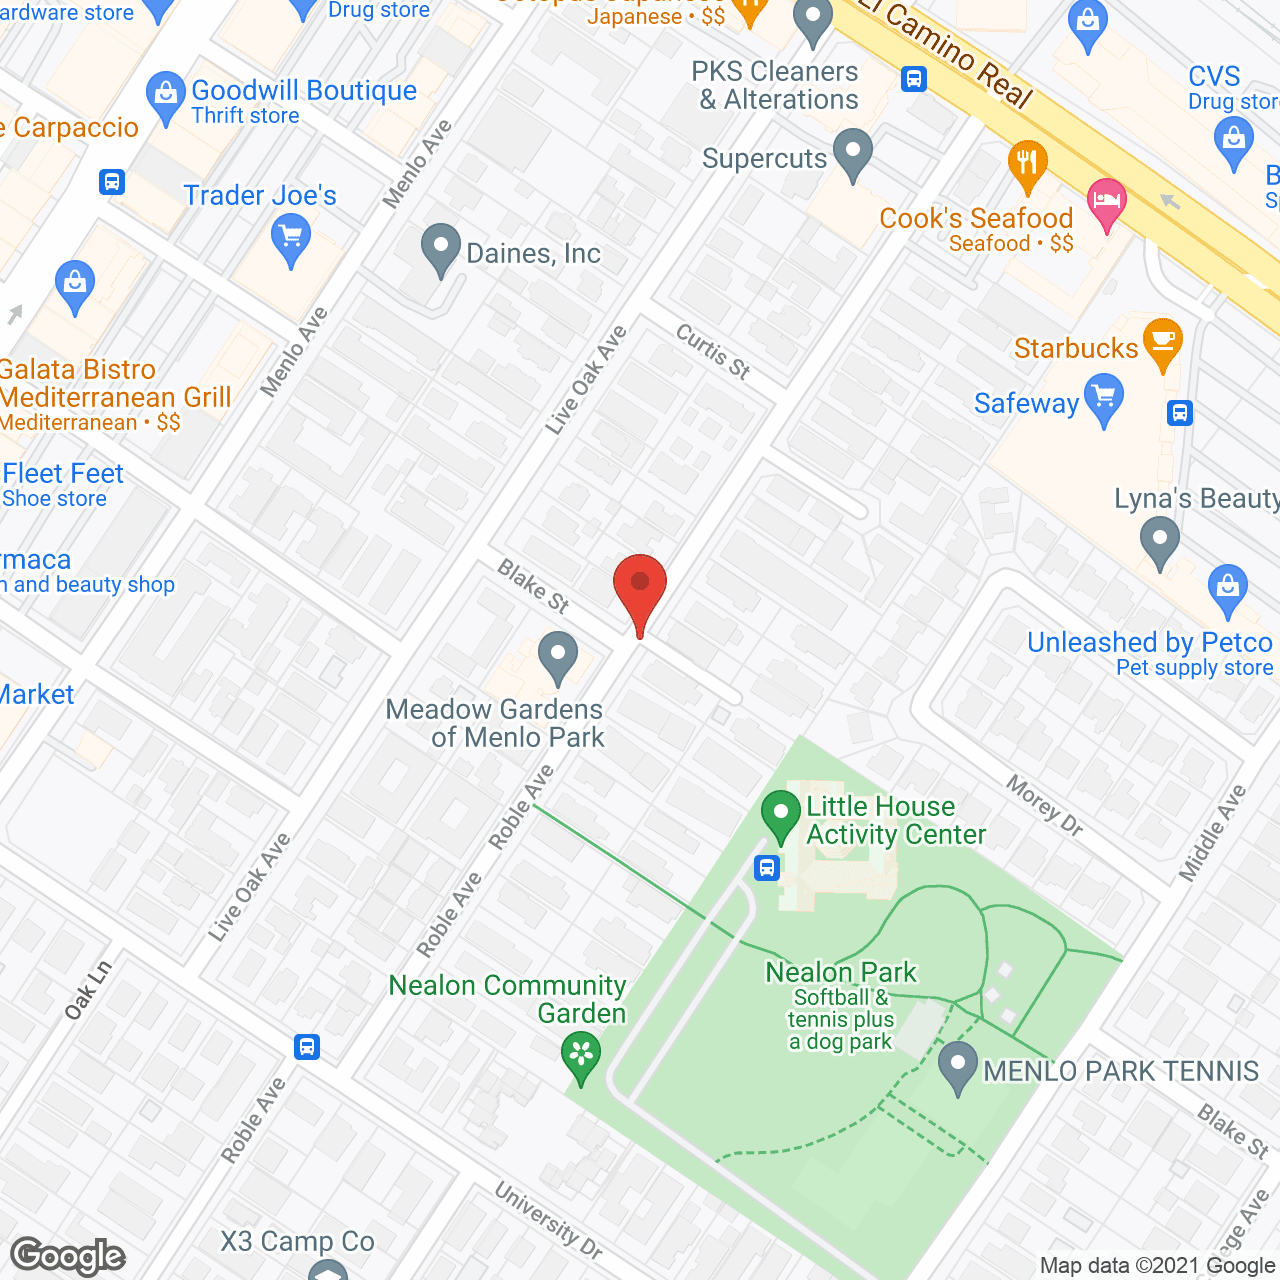 Meadow Gardens of Menlo Park in google map